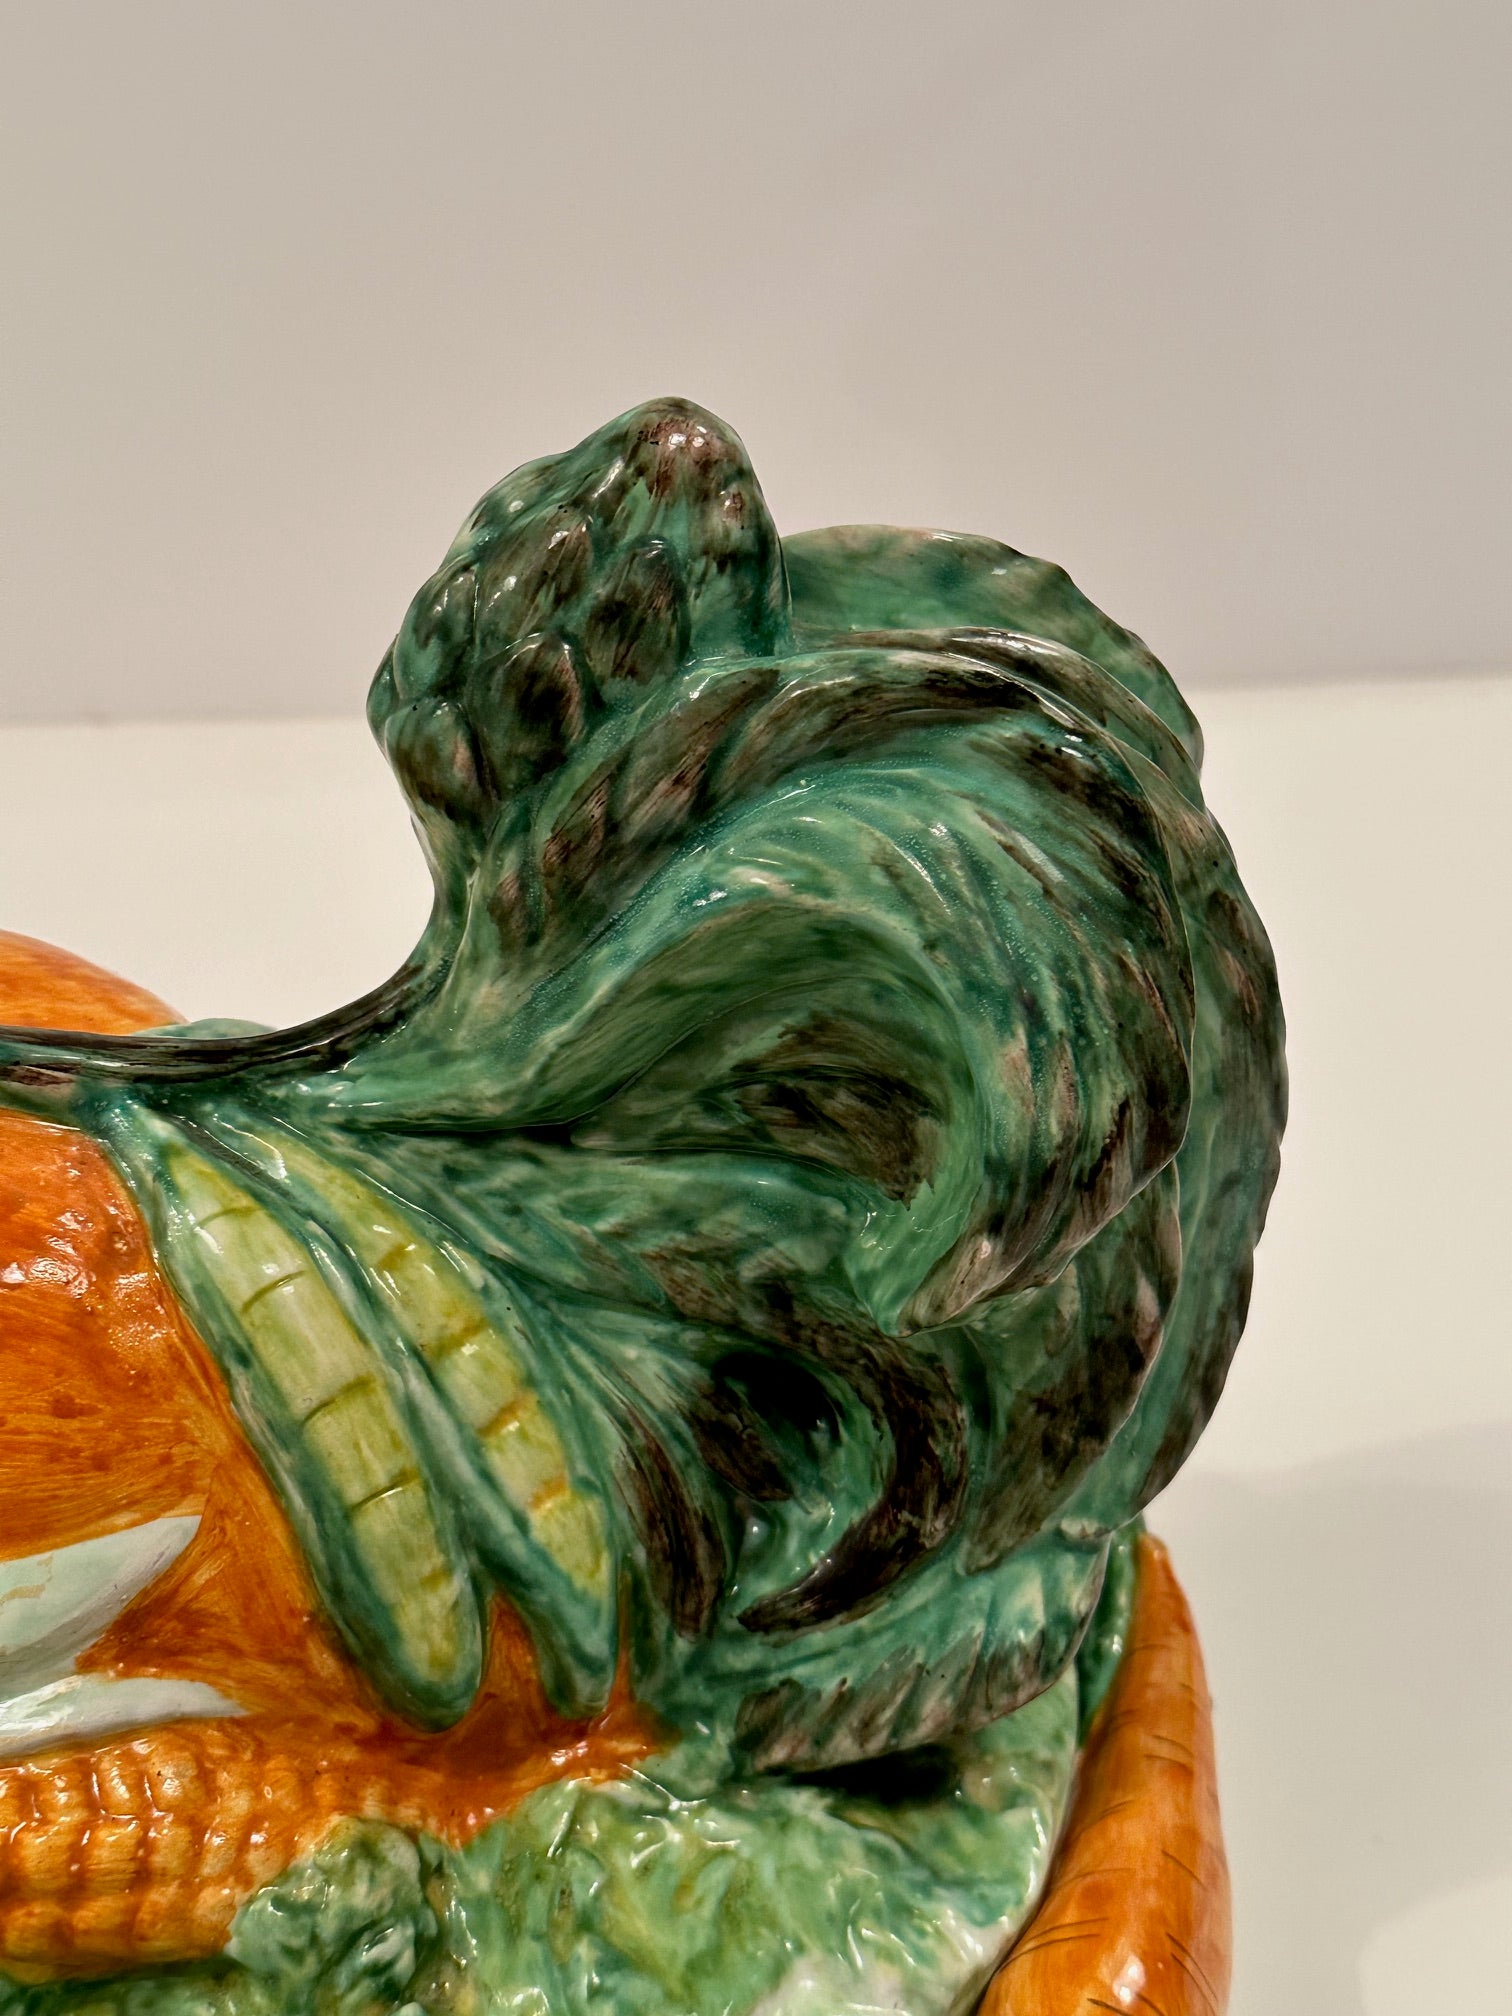 Wunderbar dekorative, handbemalte italienische Hahnterrine aus Keramik mit Gemüsekruste.
2